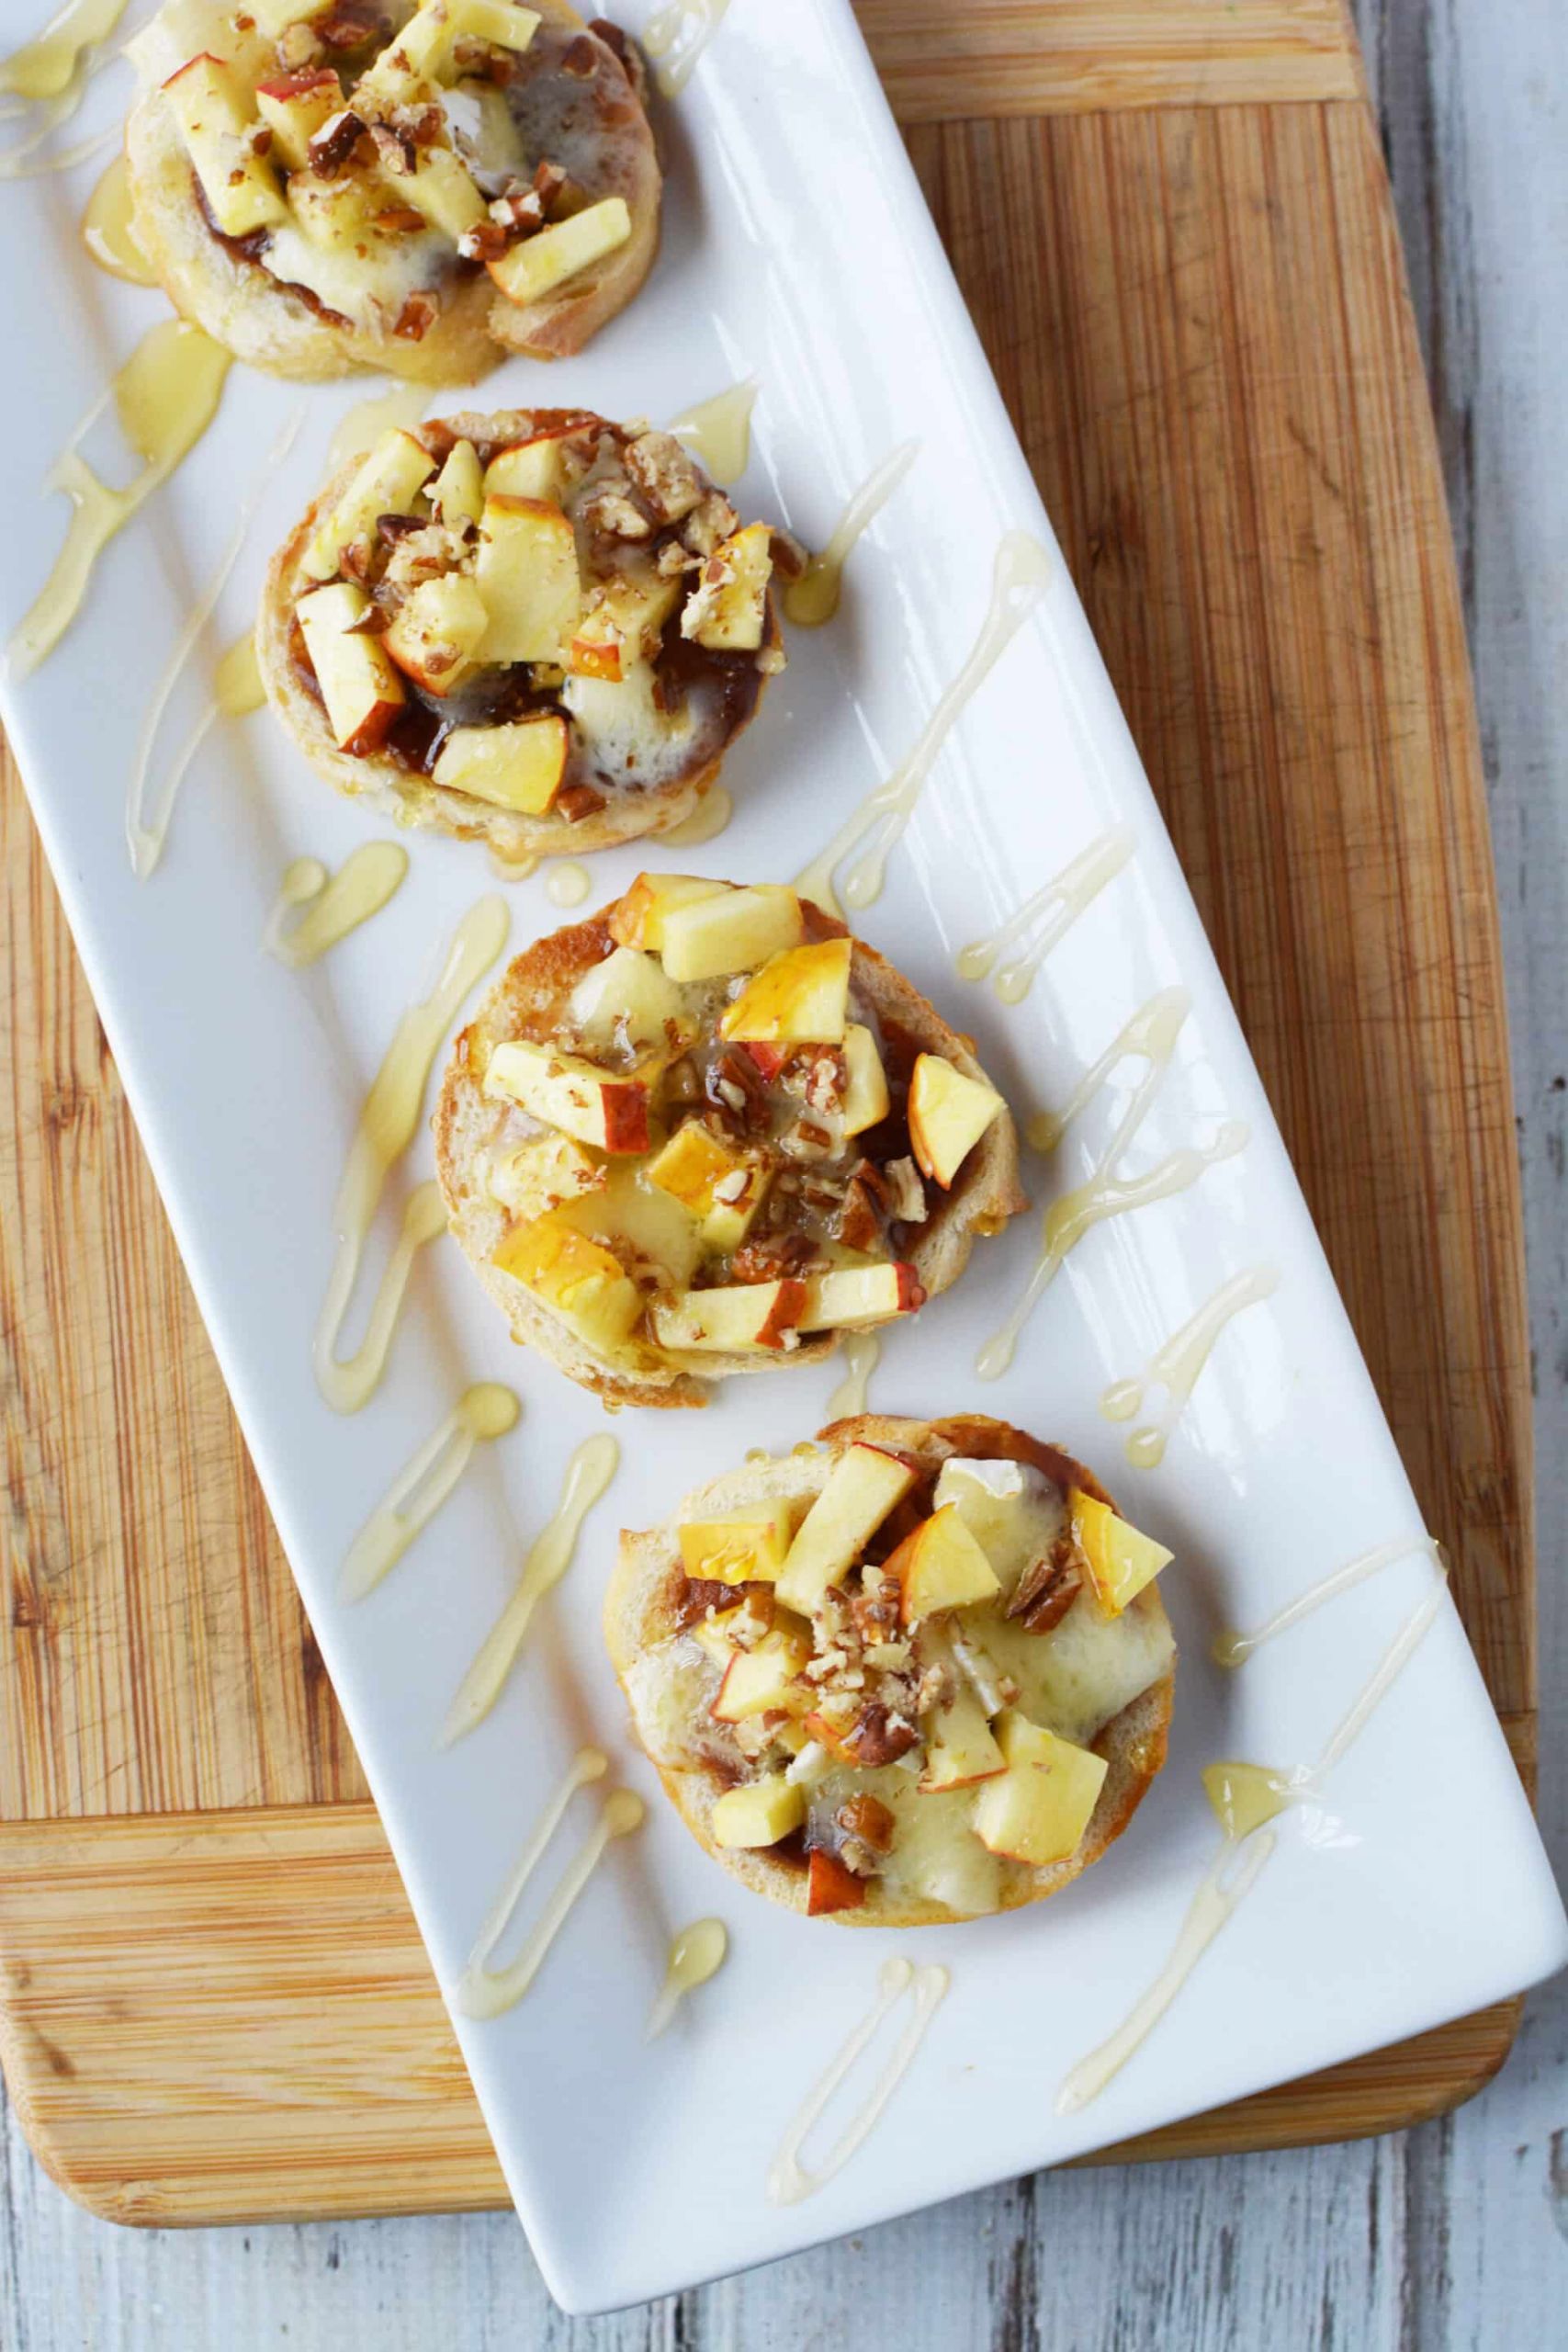 Apple Appetizer Recipes
 Honey Apple Pecan Crostini Recipe The Perfect Appetizer